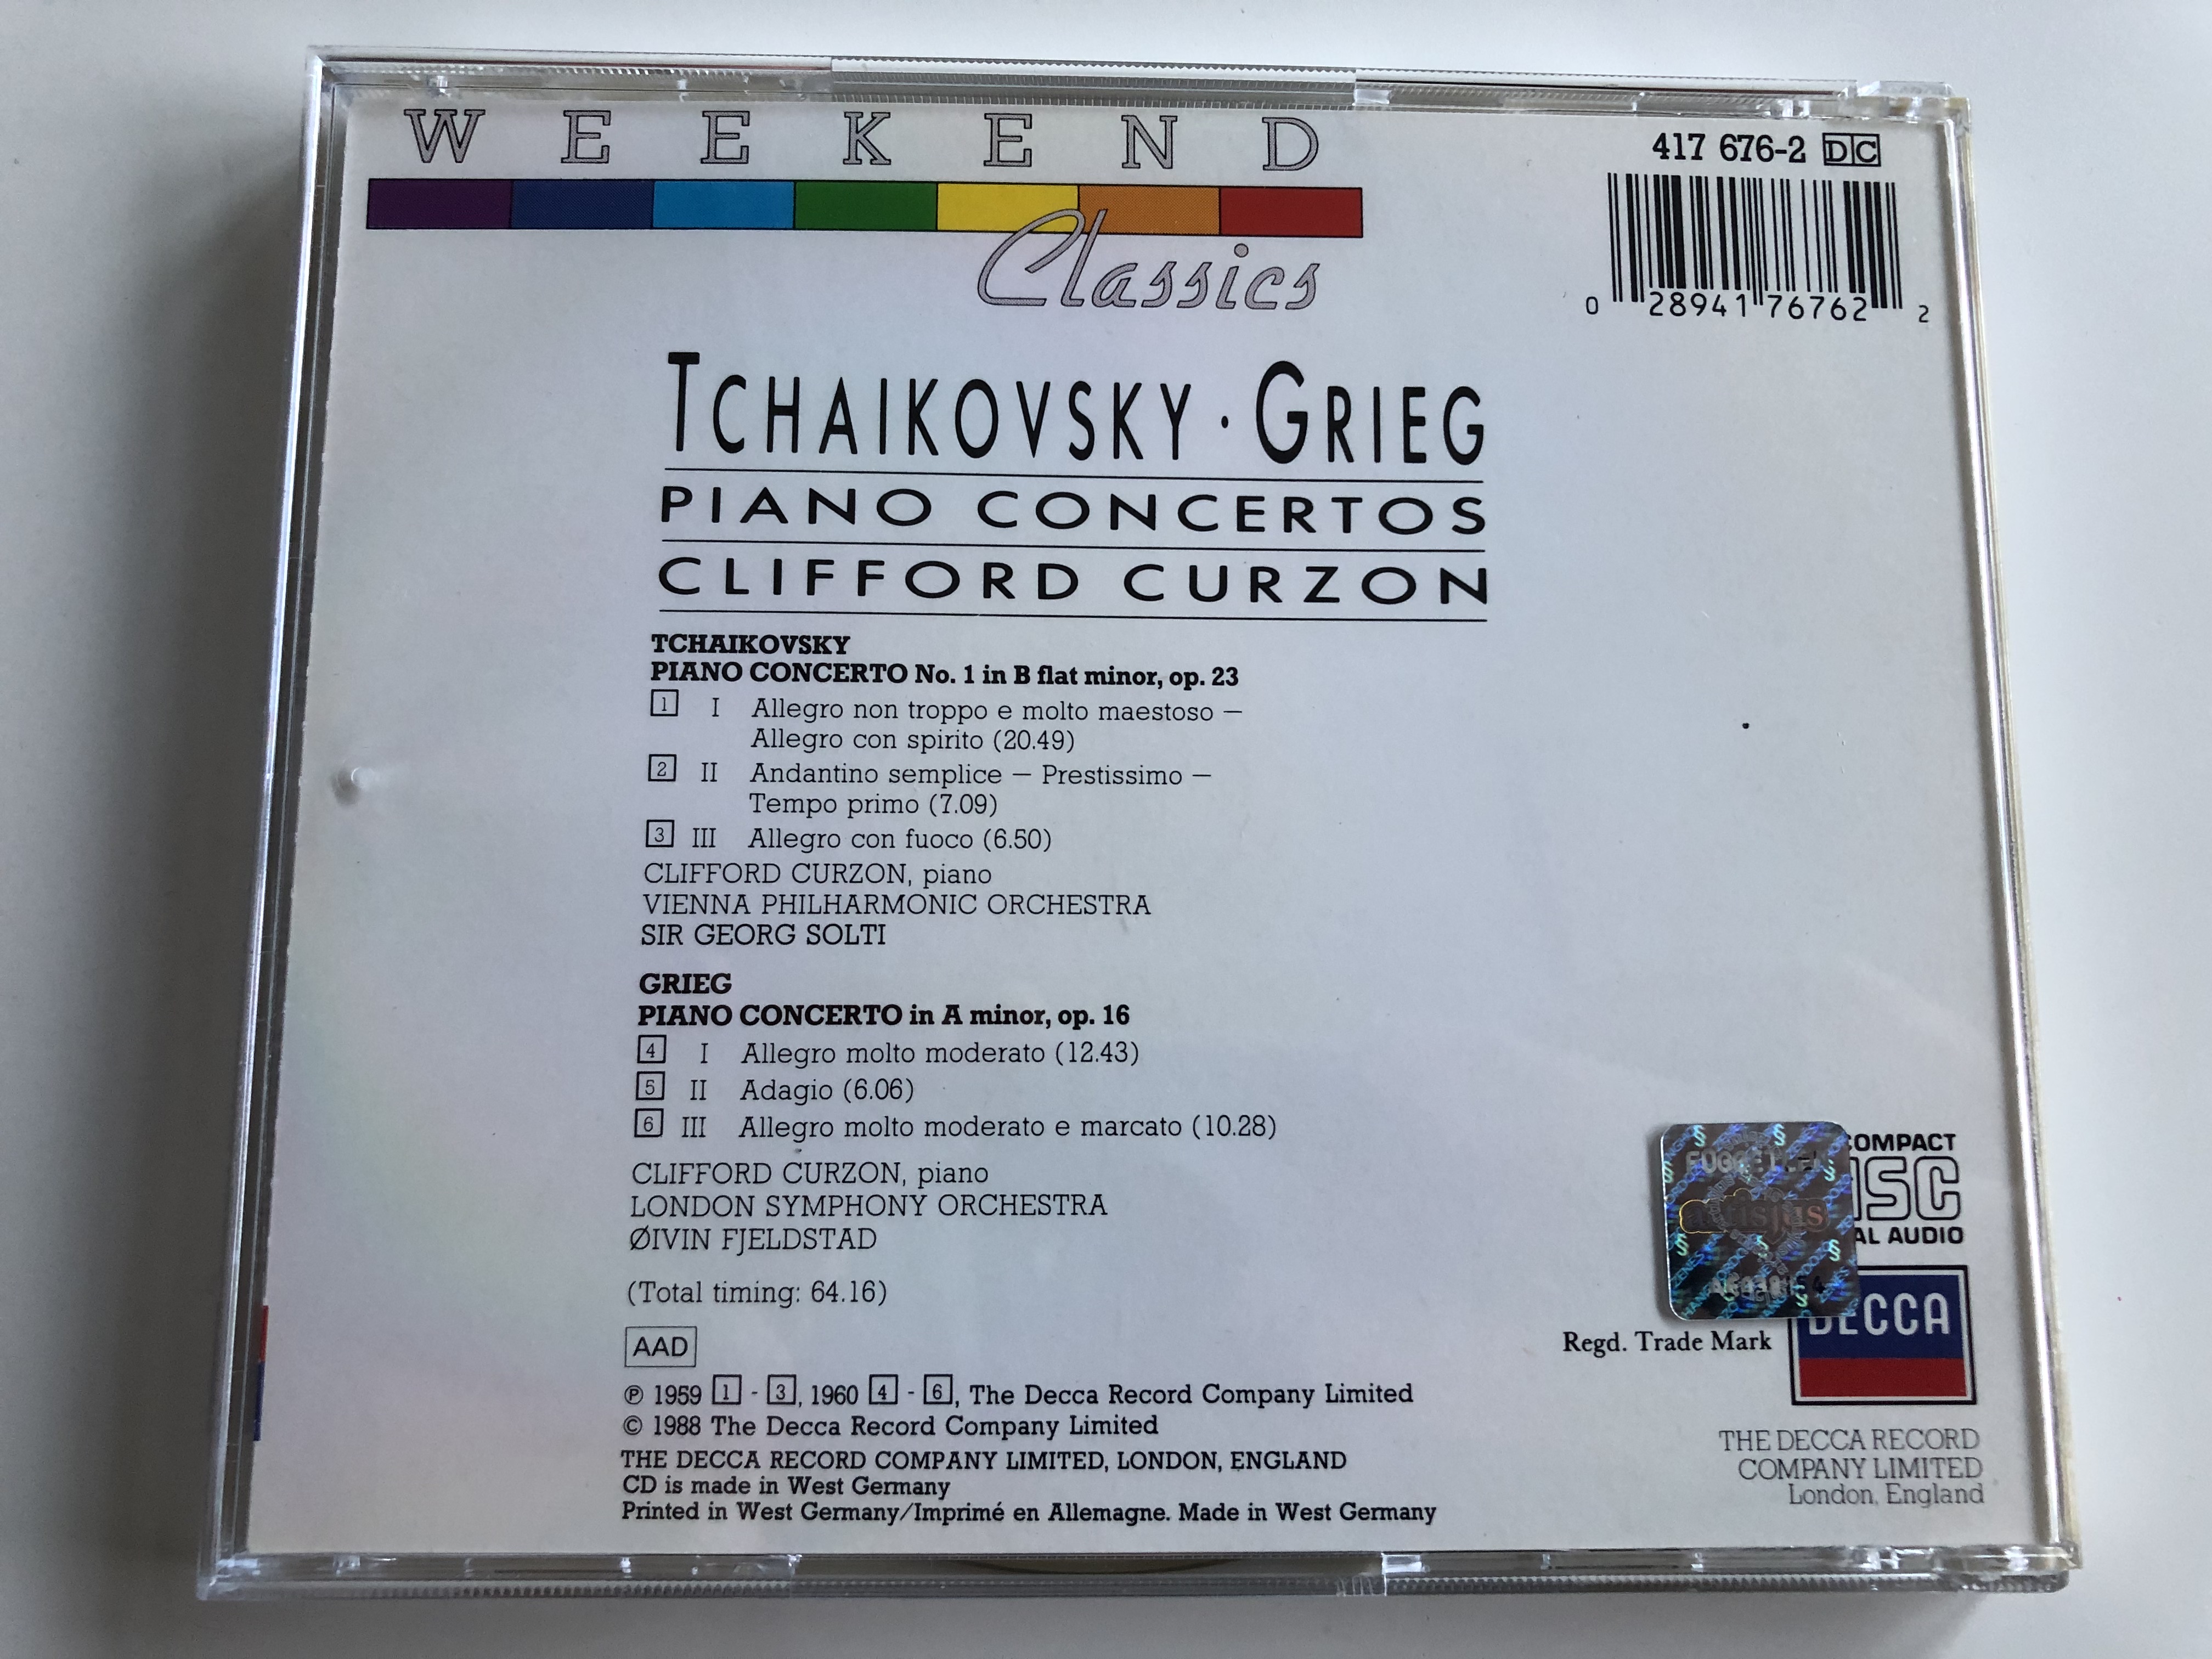 tchaikovsky-grieg-piano-concertos-clifford-curzon-decca-audio-cd-1988-stereo-417-676-2-4-.jpg